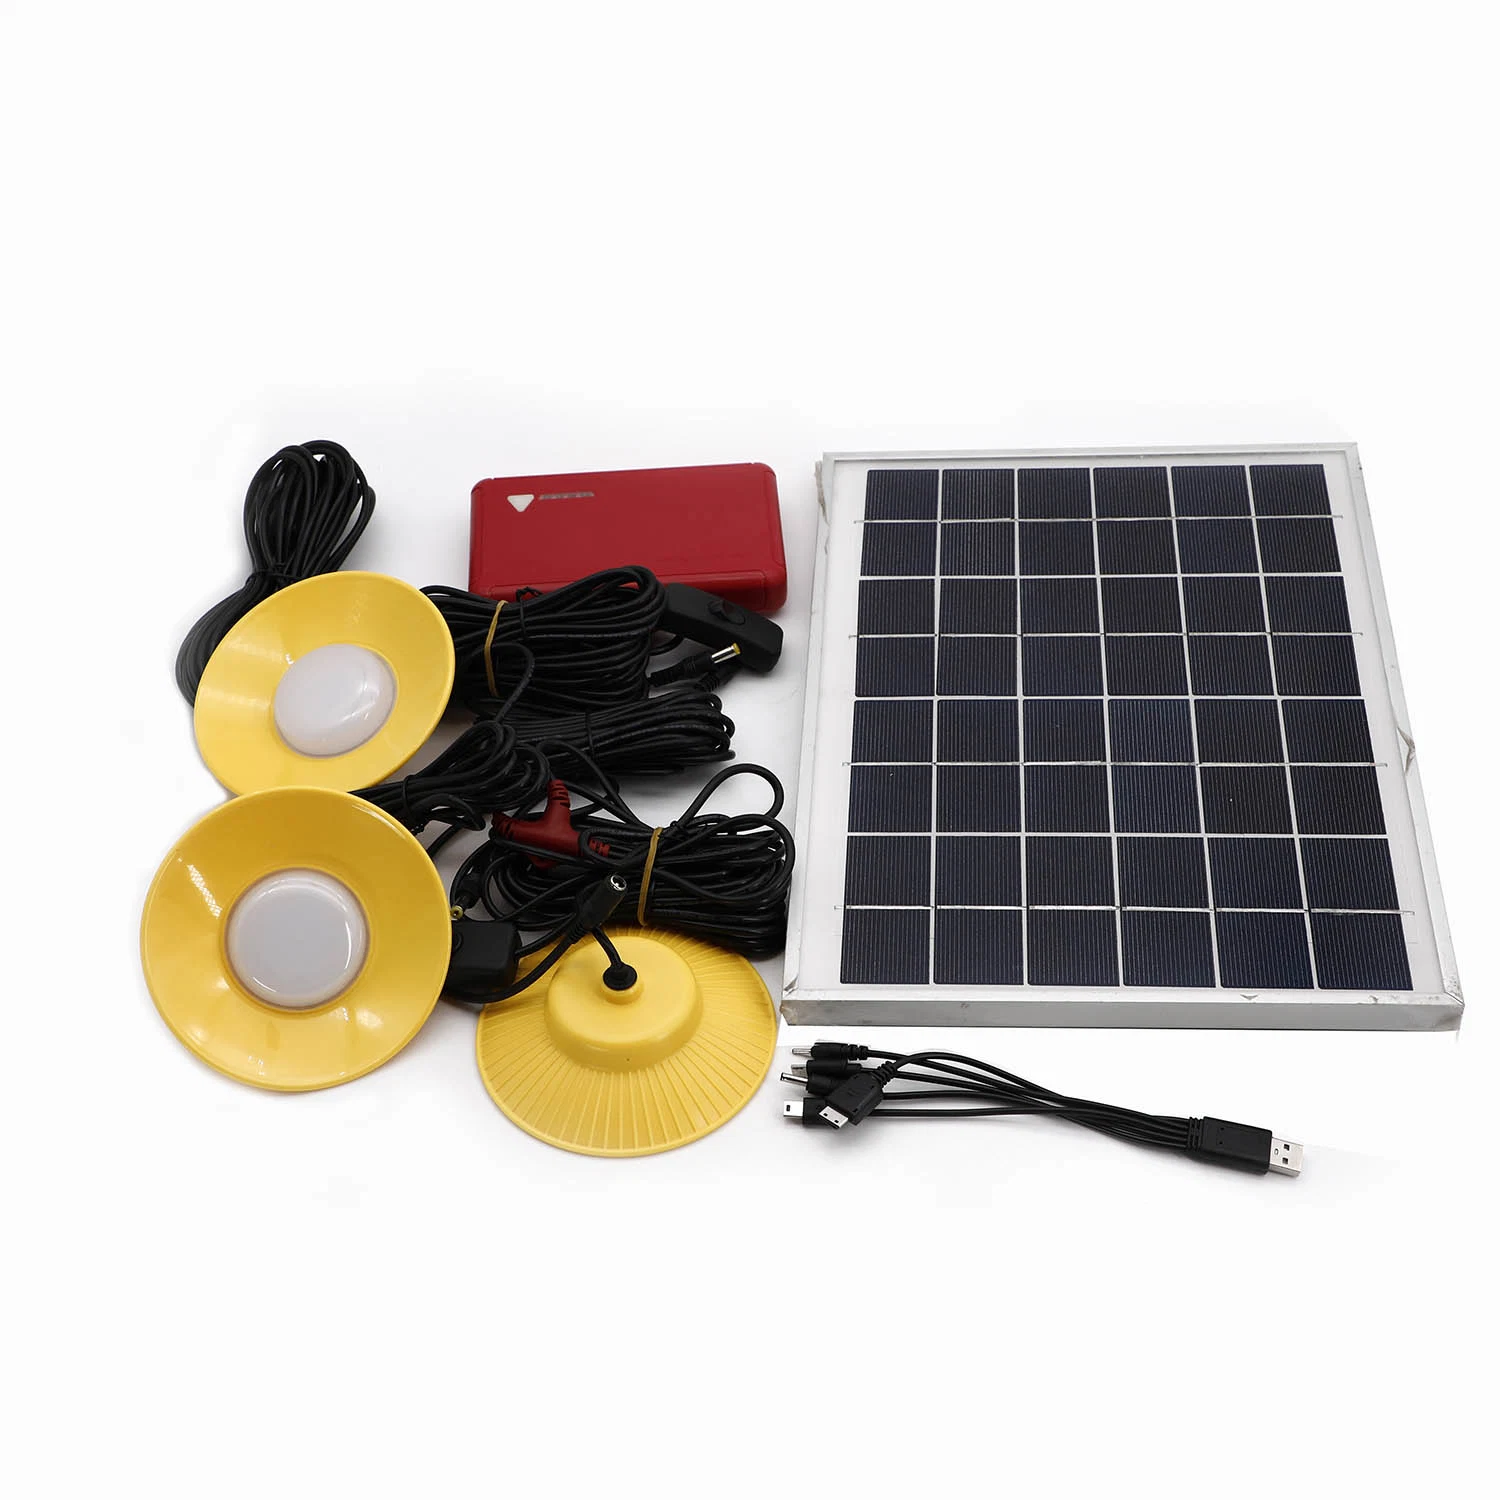 5200mAh Li-ion Battery Backup 10W Emergency Home Use Lighting Solar Panel Powered LED Lighting System Kit Light